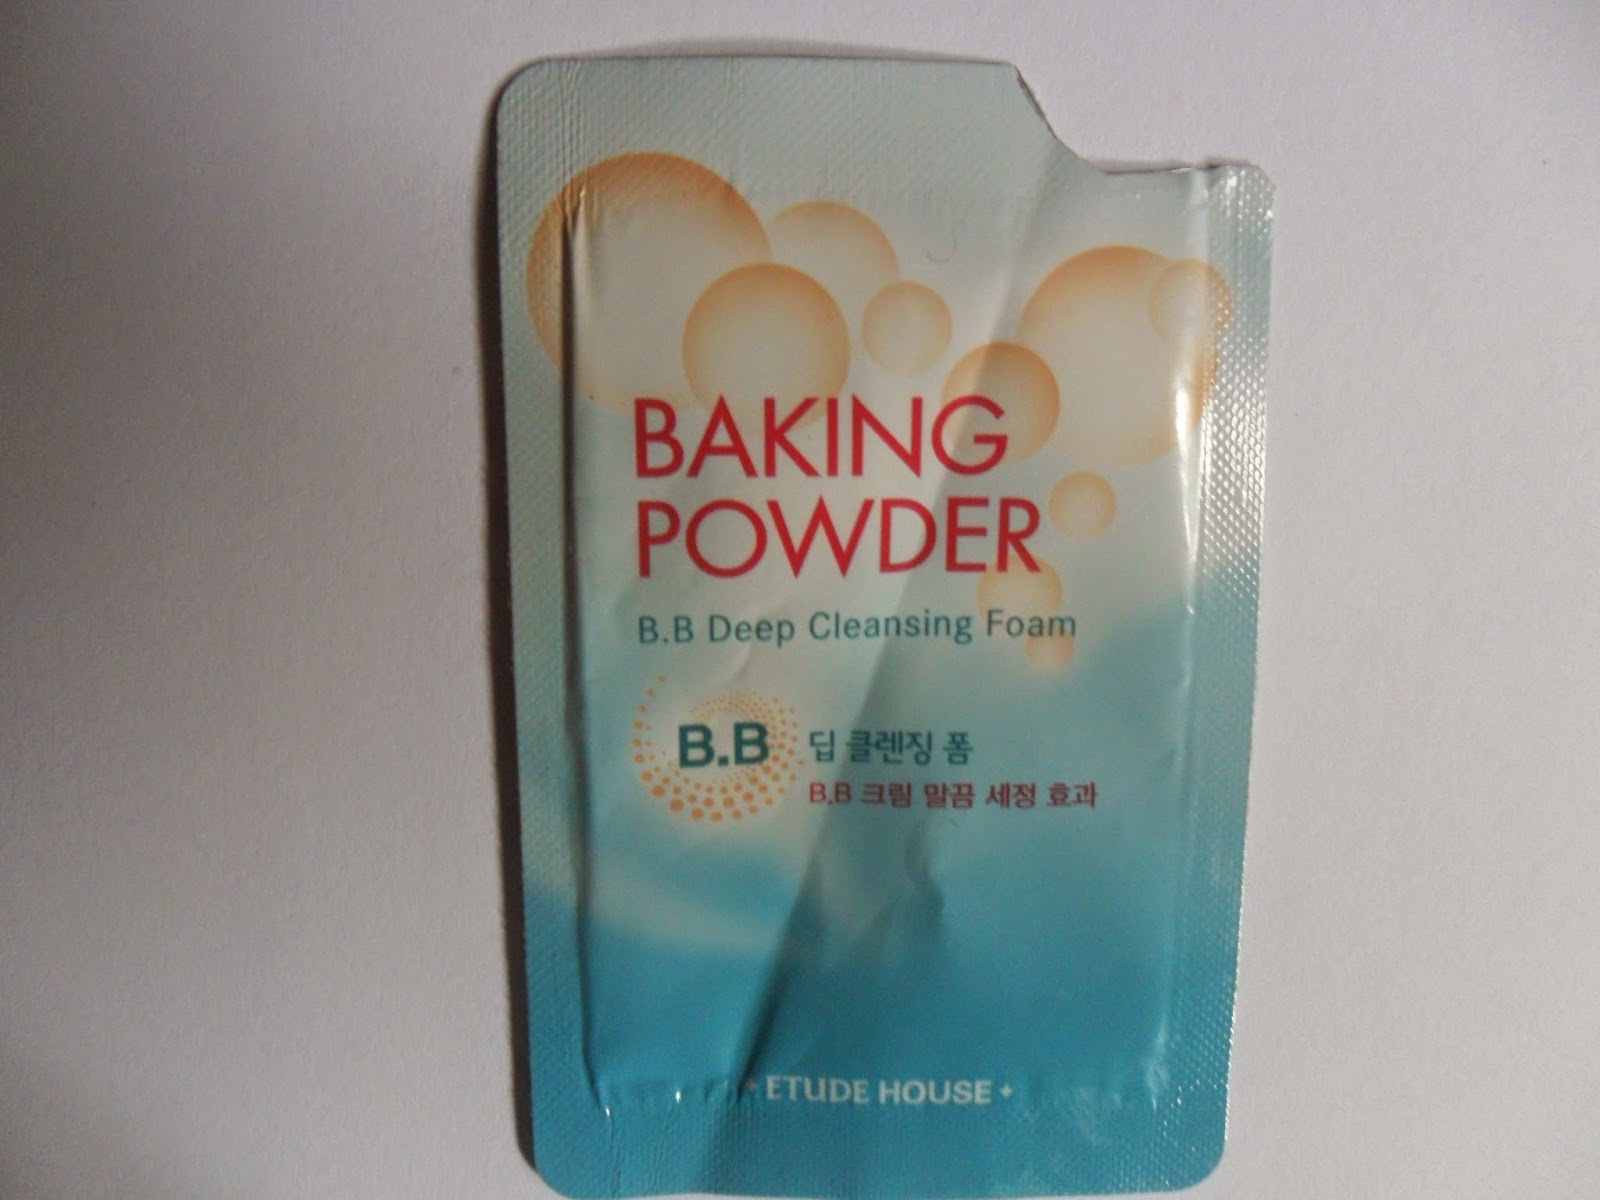 Baking powder перевод на русский. Бейкинг пудра. Baking Powder Cleansing Foam пробник. Etude Baking Powder крем-маска. Пудра для бейкинга.